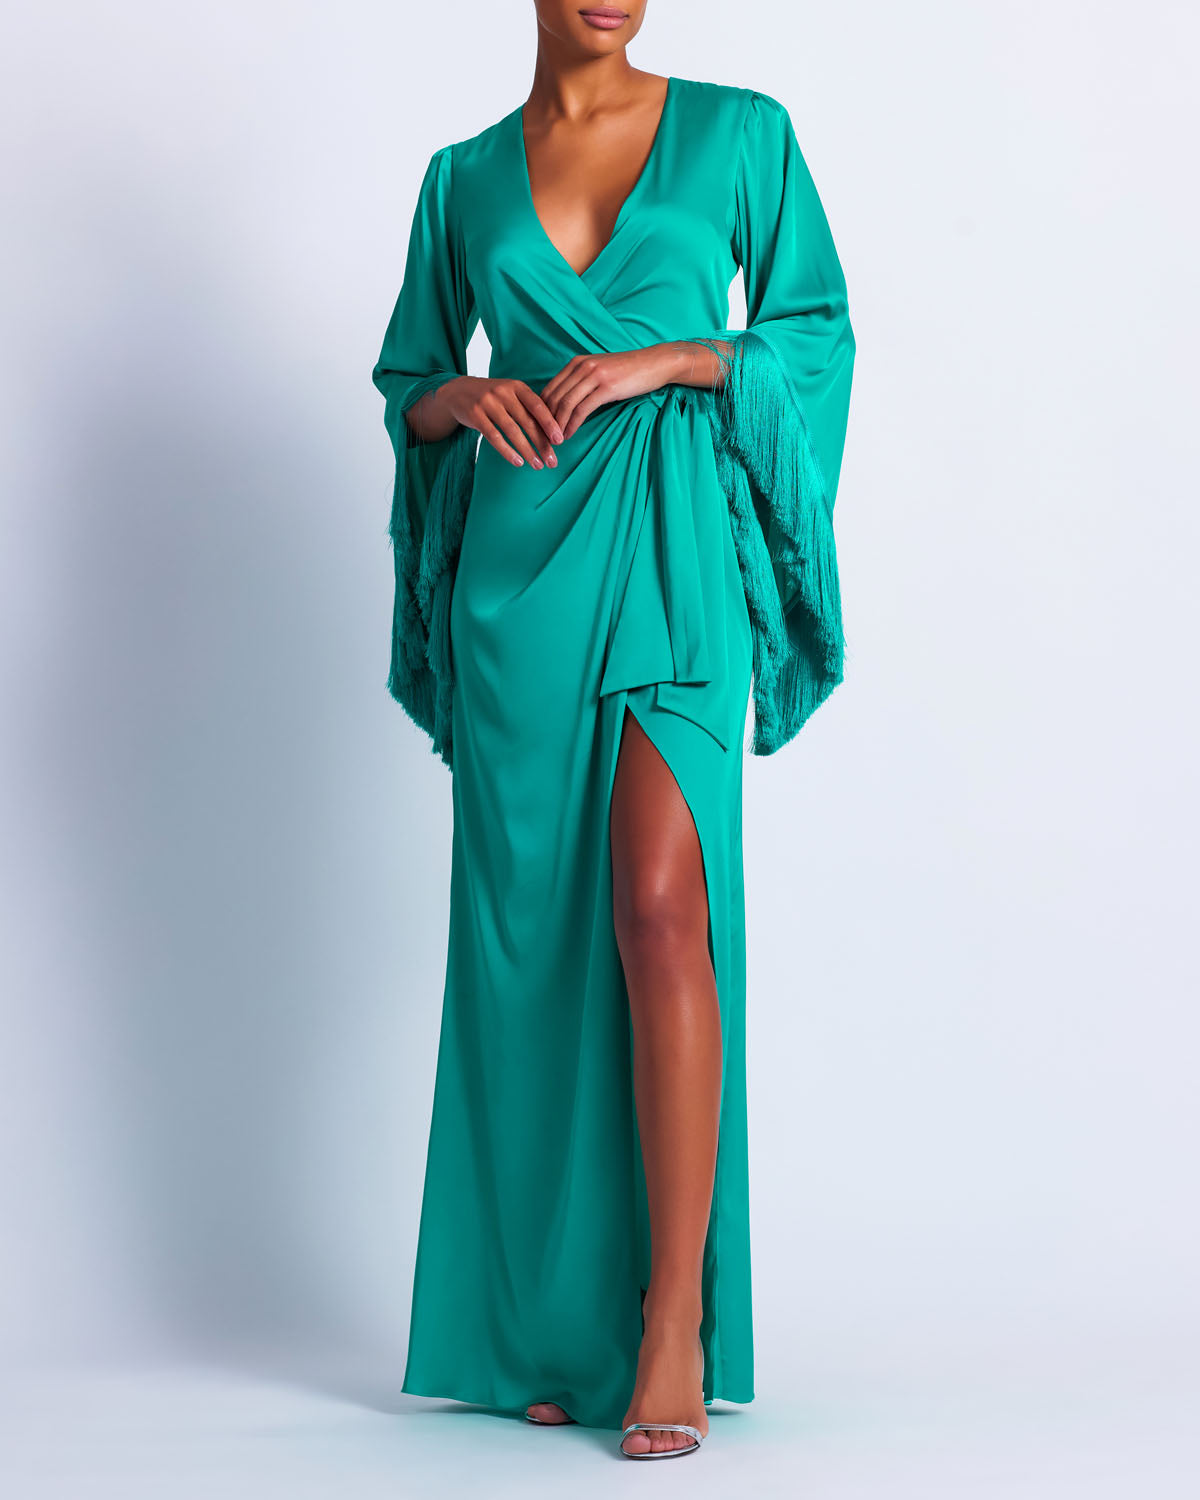 Fringe Trim Wrap Dress - Premium Long dress from Marina St Barth - Just $650! Shop now at Marina St Barth